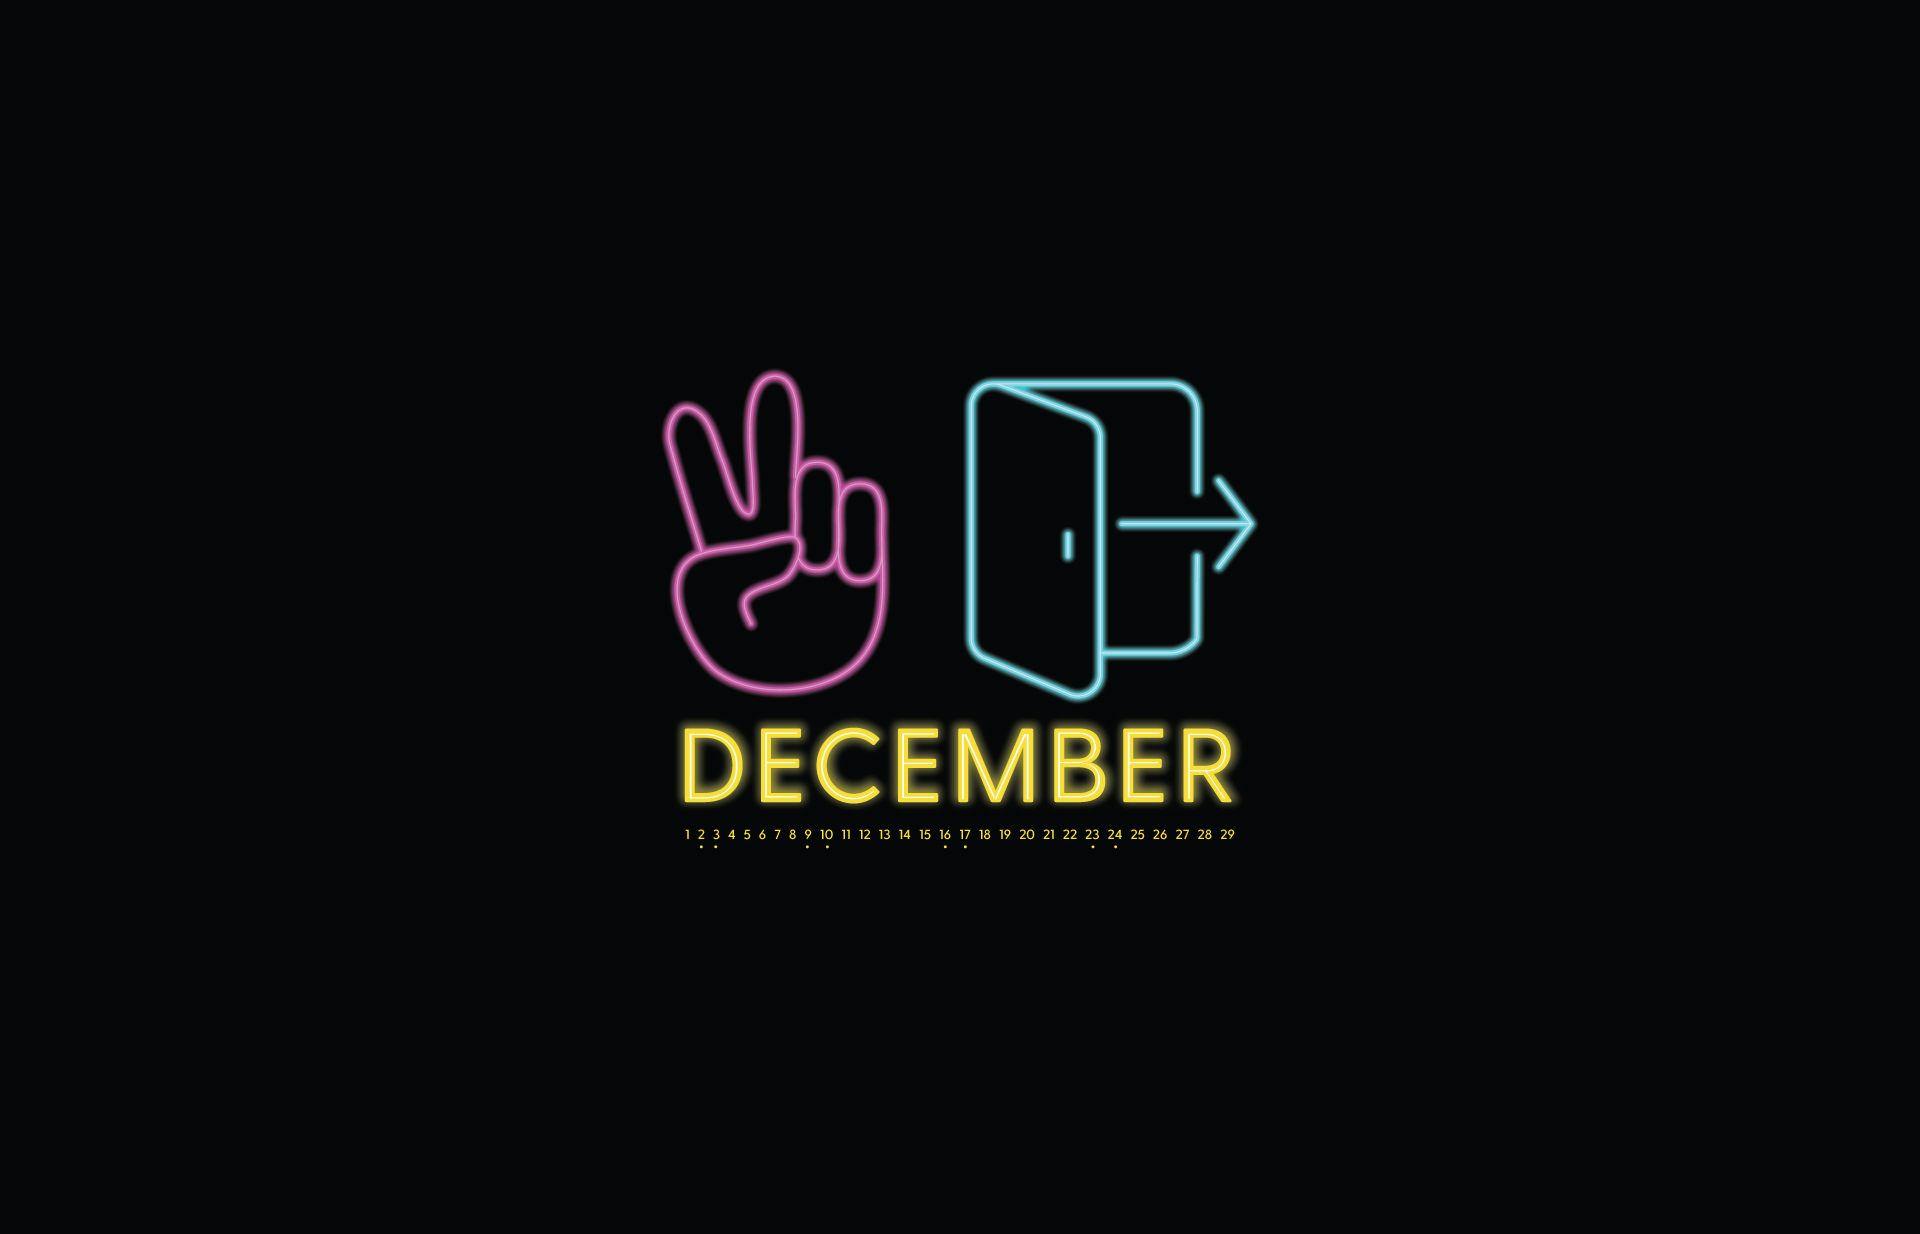 December 2017 Last Desktop Calendar Wallpaper